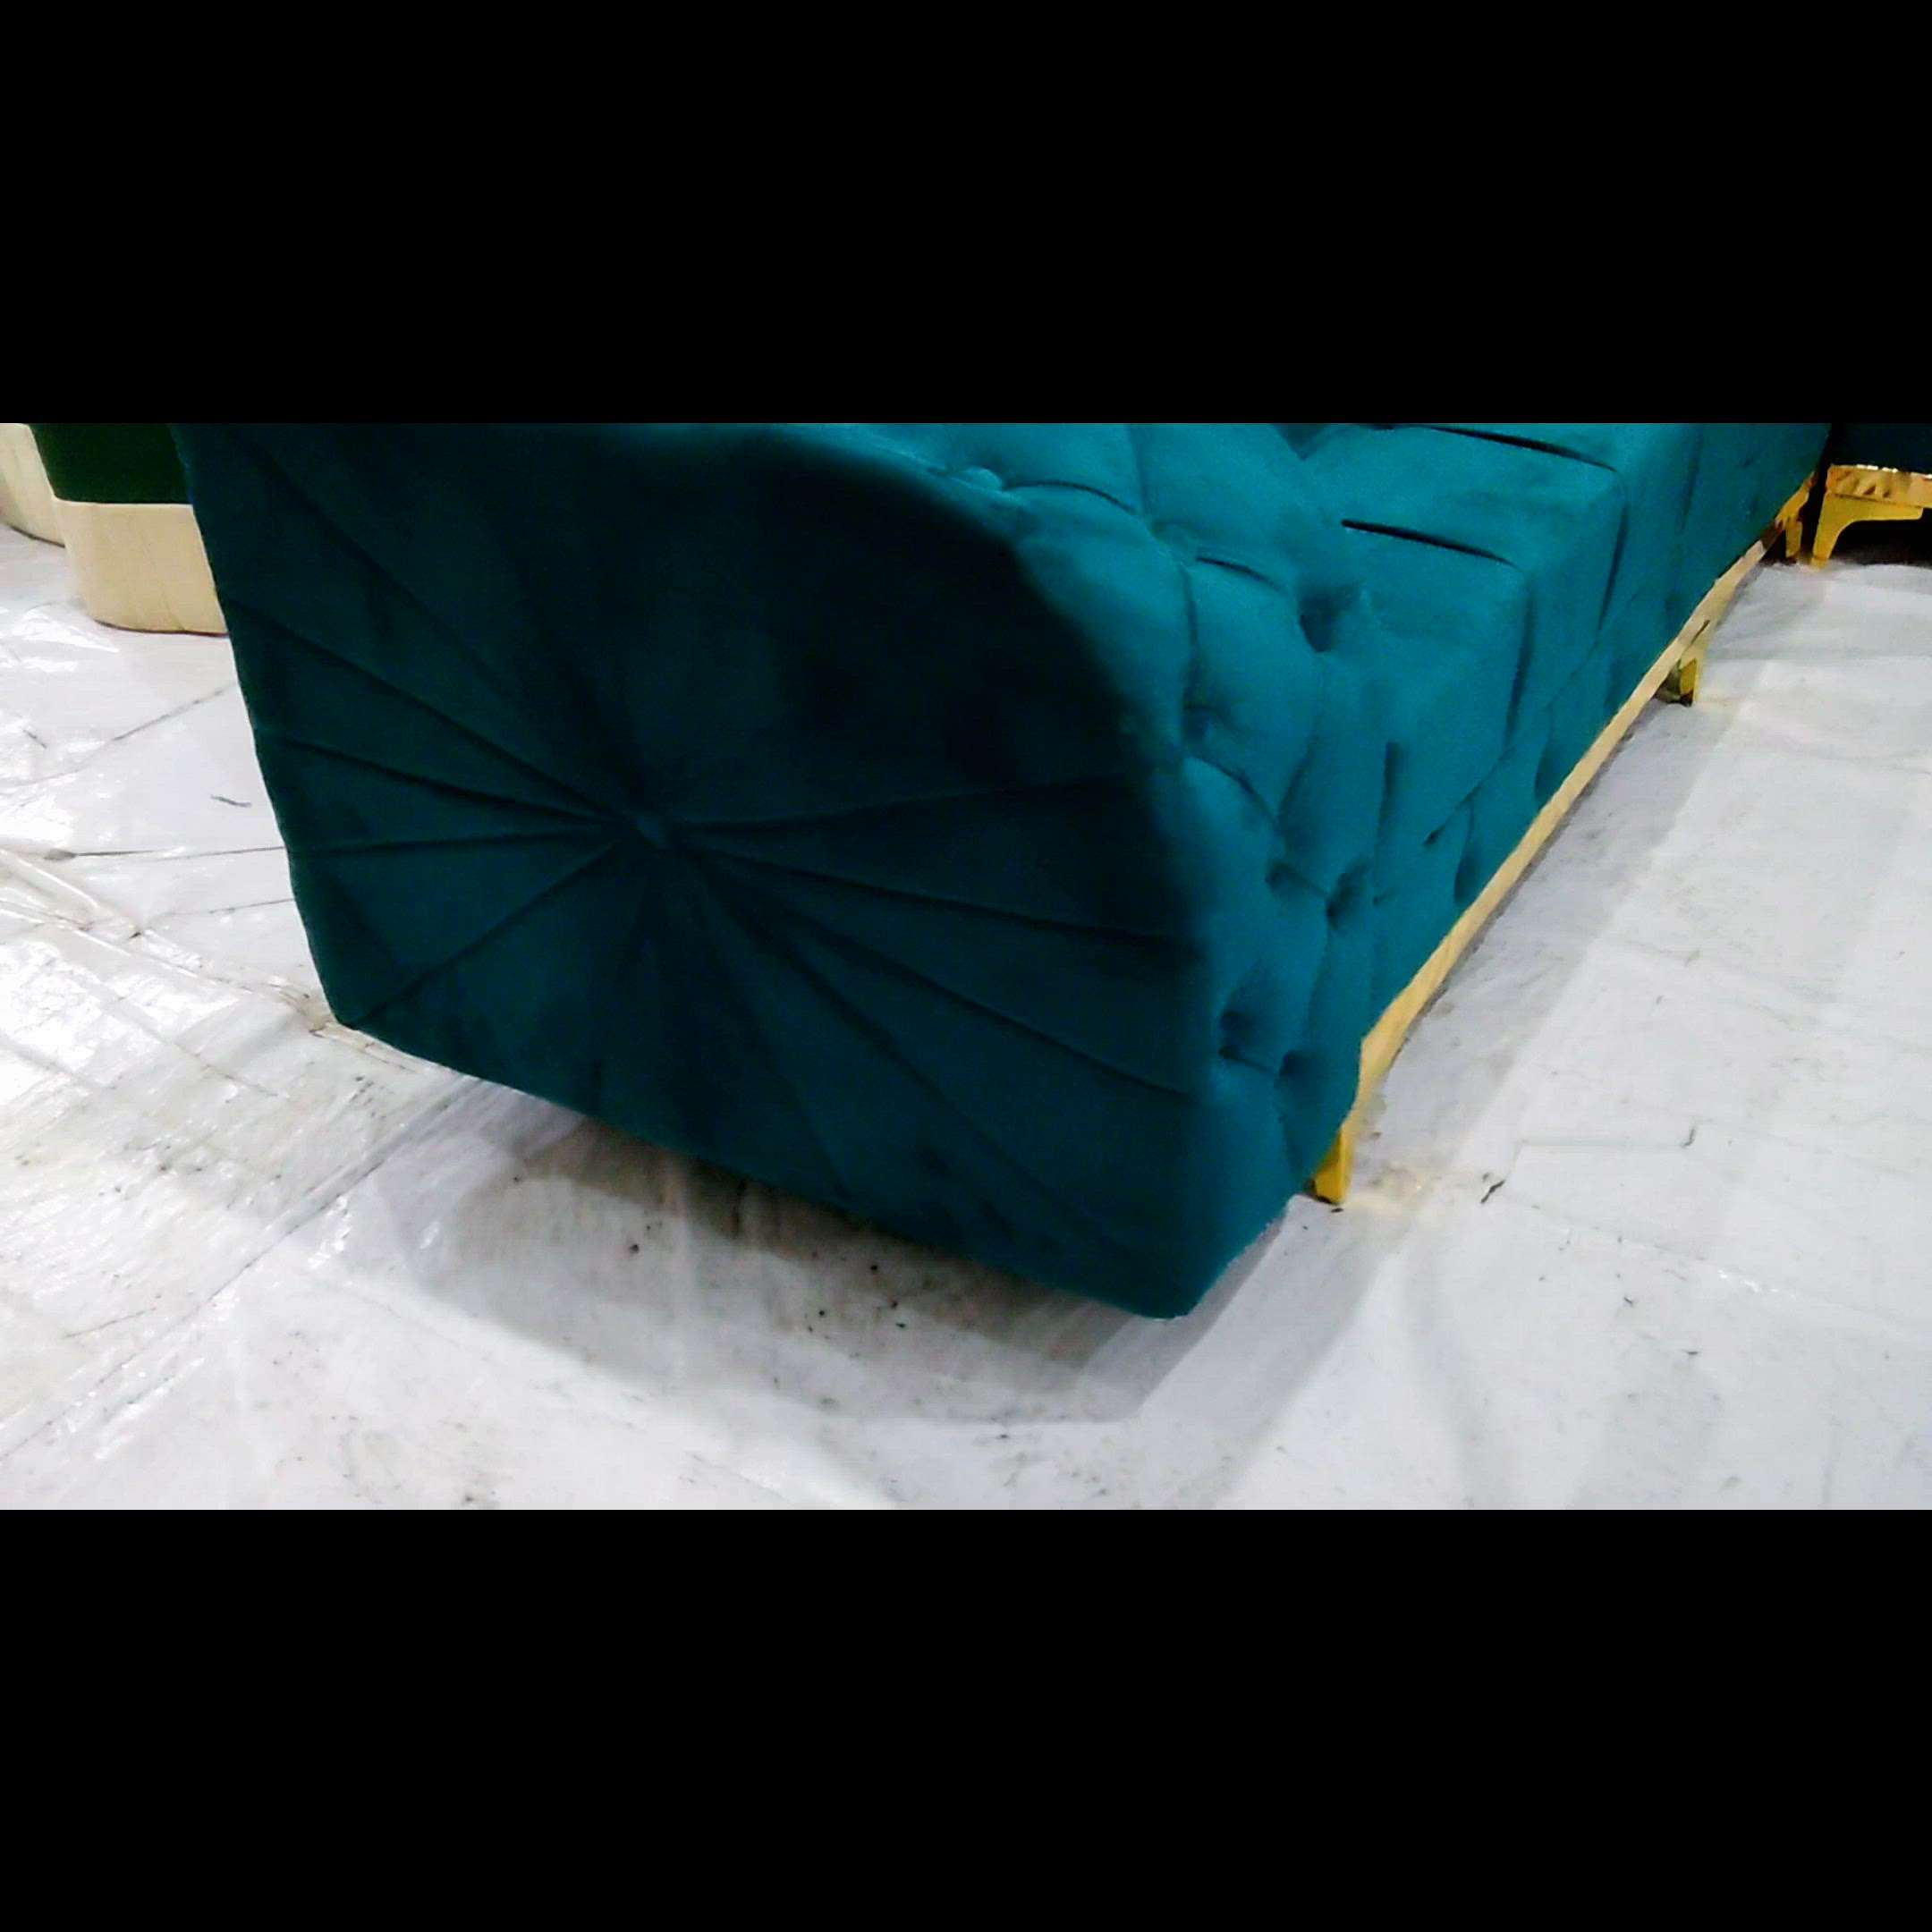 Sofa set 😍

Direct factory manufacturing wholesale price best quality 
Low price

immi furniture
For Detail contact -
Call & WhatsAp

6262444804
7869916892
#immifurniture

Sofaset/ luxury sofa/new Sofa Design/modern sofa/corner sofa #shoart #viral  #sofa #interior #indore #video #furniture #furnituredesign

Address : chandan nagar sirpur talab ke aage dhar road indore
 http://instagram.com/immifurniture
 https://youtube.com/channel/UC4IdjOlIdfWCK2YASlpFXgQ
 https://www.facebook.com/Immi-furniture-105064295145638/

#furniture #interiordesign #homedecor #design #interior #furnituredesign #home #decor #sofa #architecture #interiors #homedesign  #decoration #art #MadhyaPradesh #Indore #indorewale #indorecity #indorefurniture #indianfood #indorediaries #india  #indianwedding #indiandufurniture #sofaset #sofa #bed #bedroomdesigns #trand #viralvideo